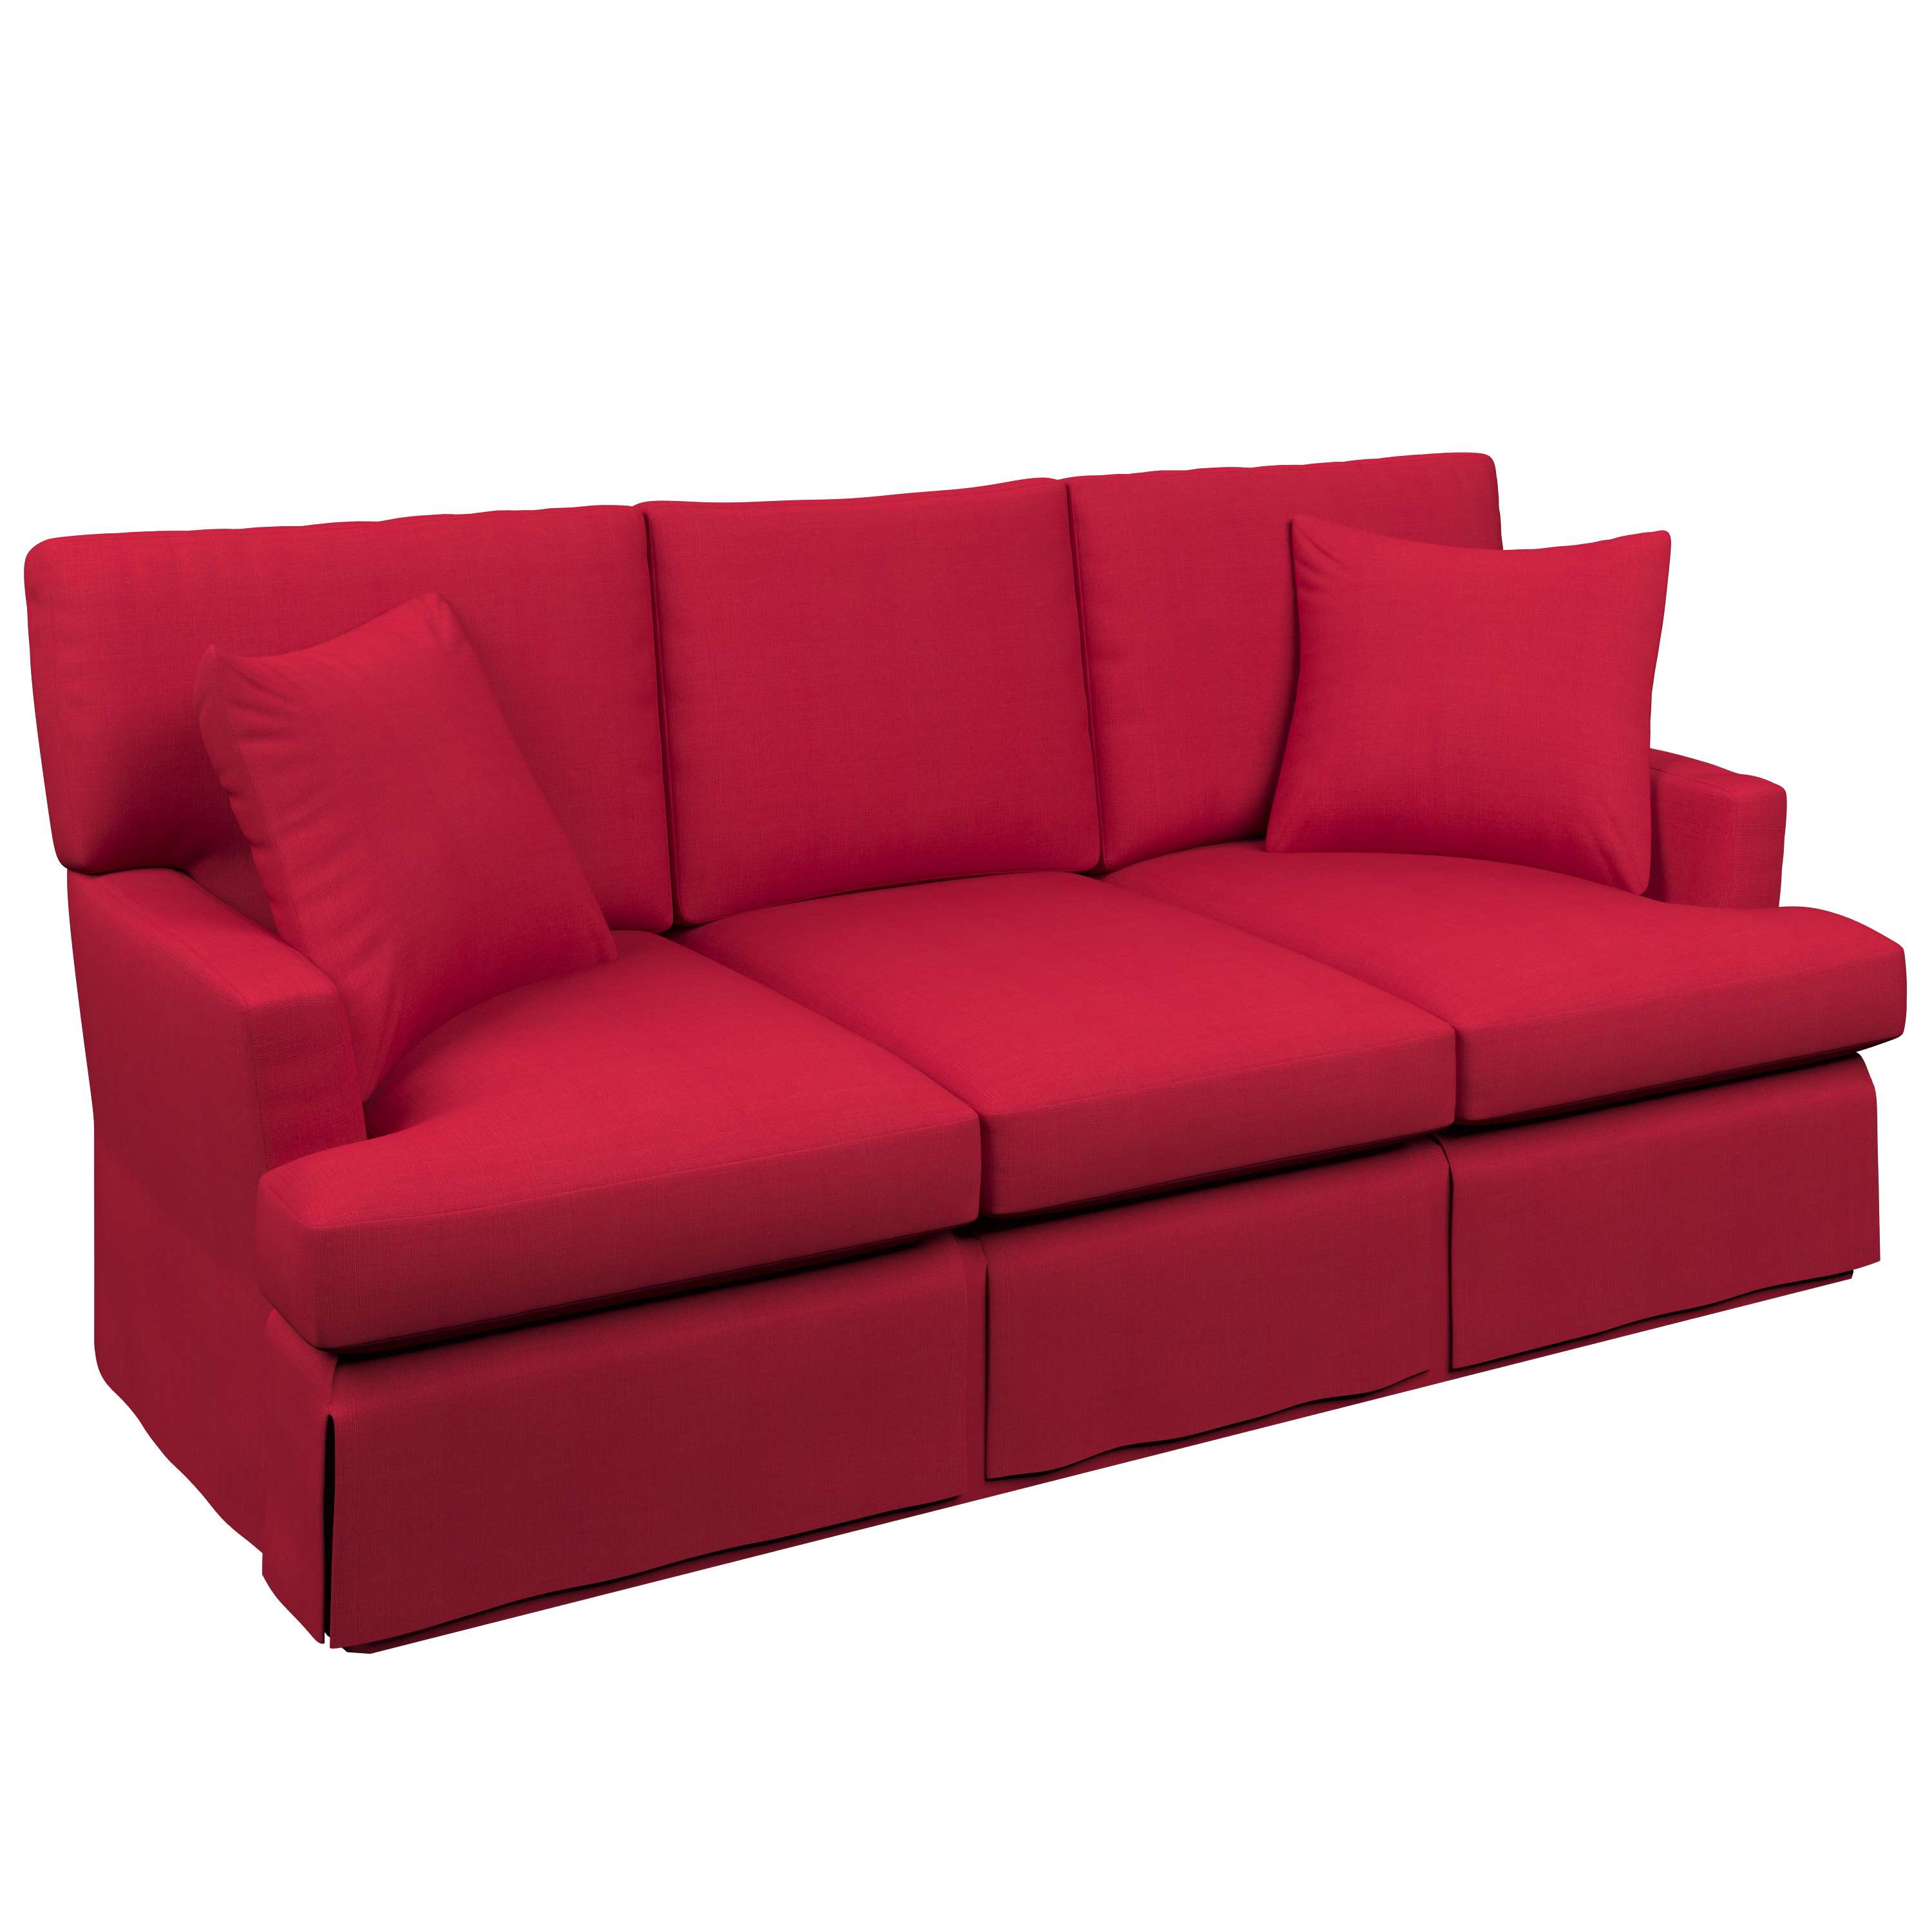 Estate Linen Red Saybrook 3 Seater Slipcovered Sofa | Furniture